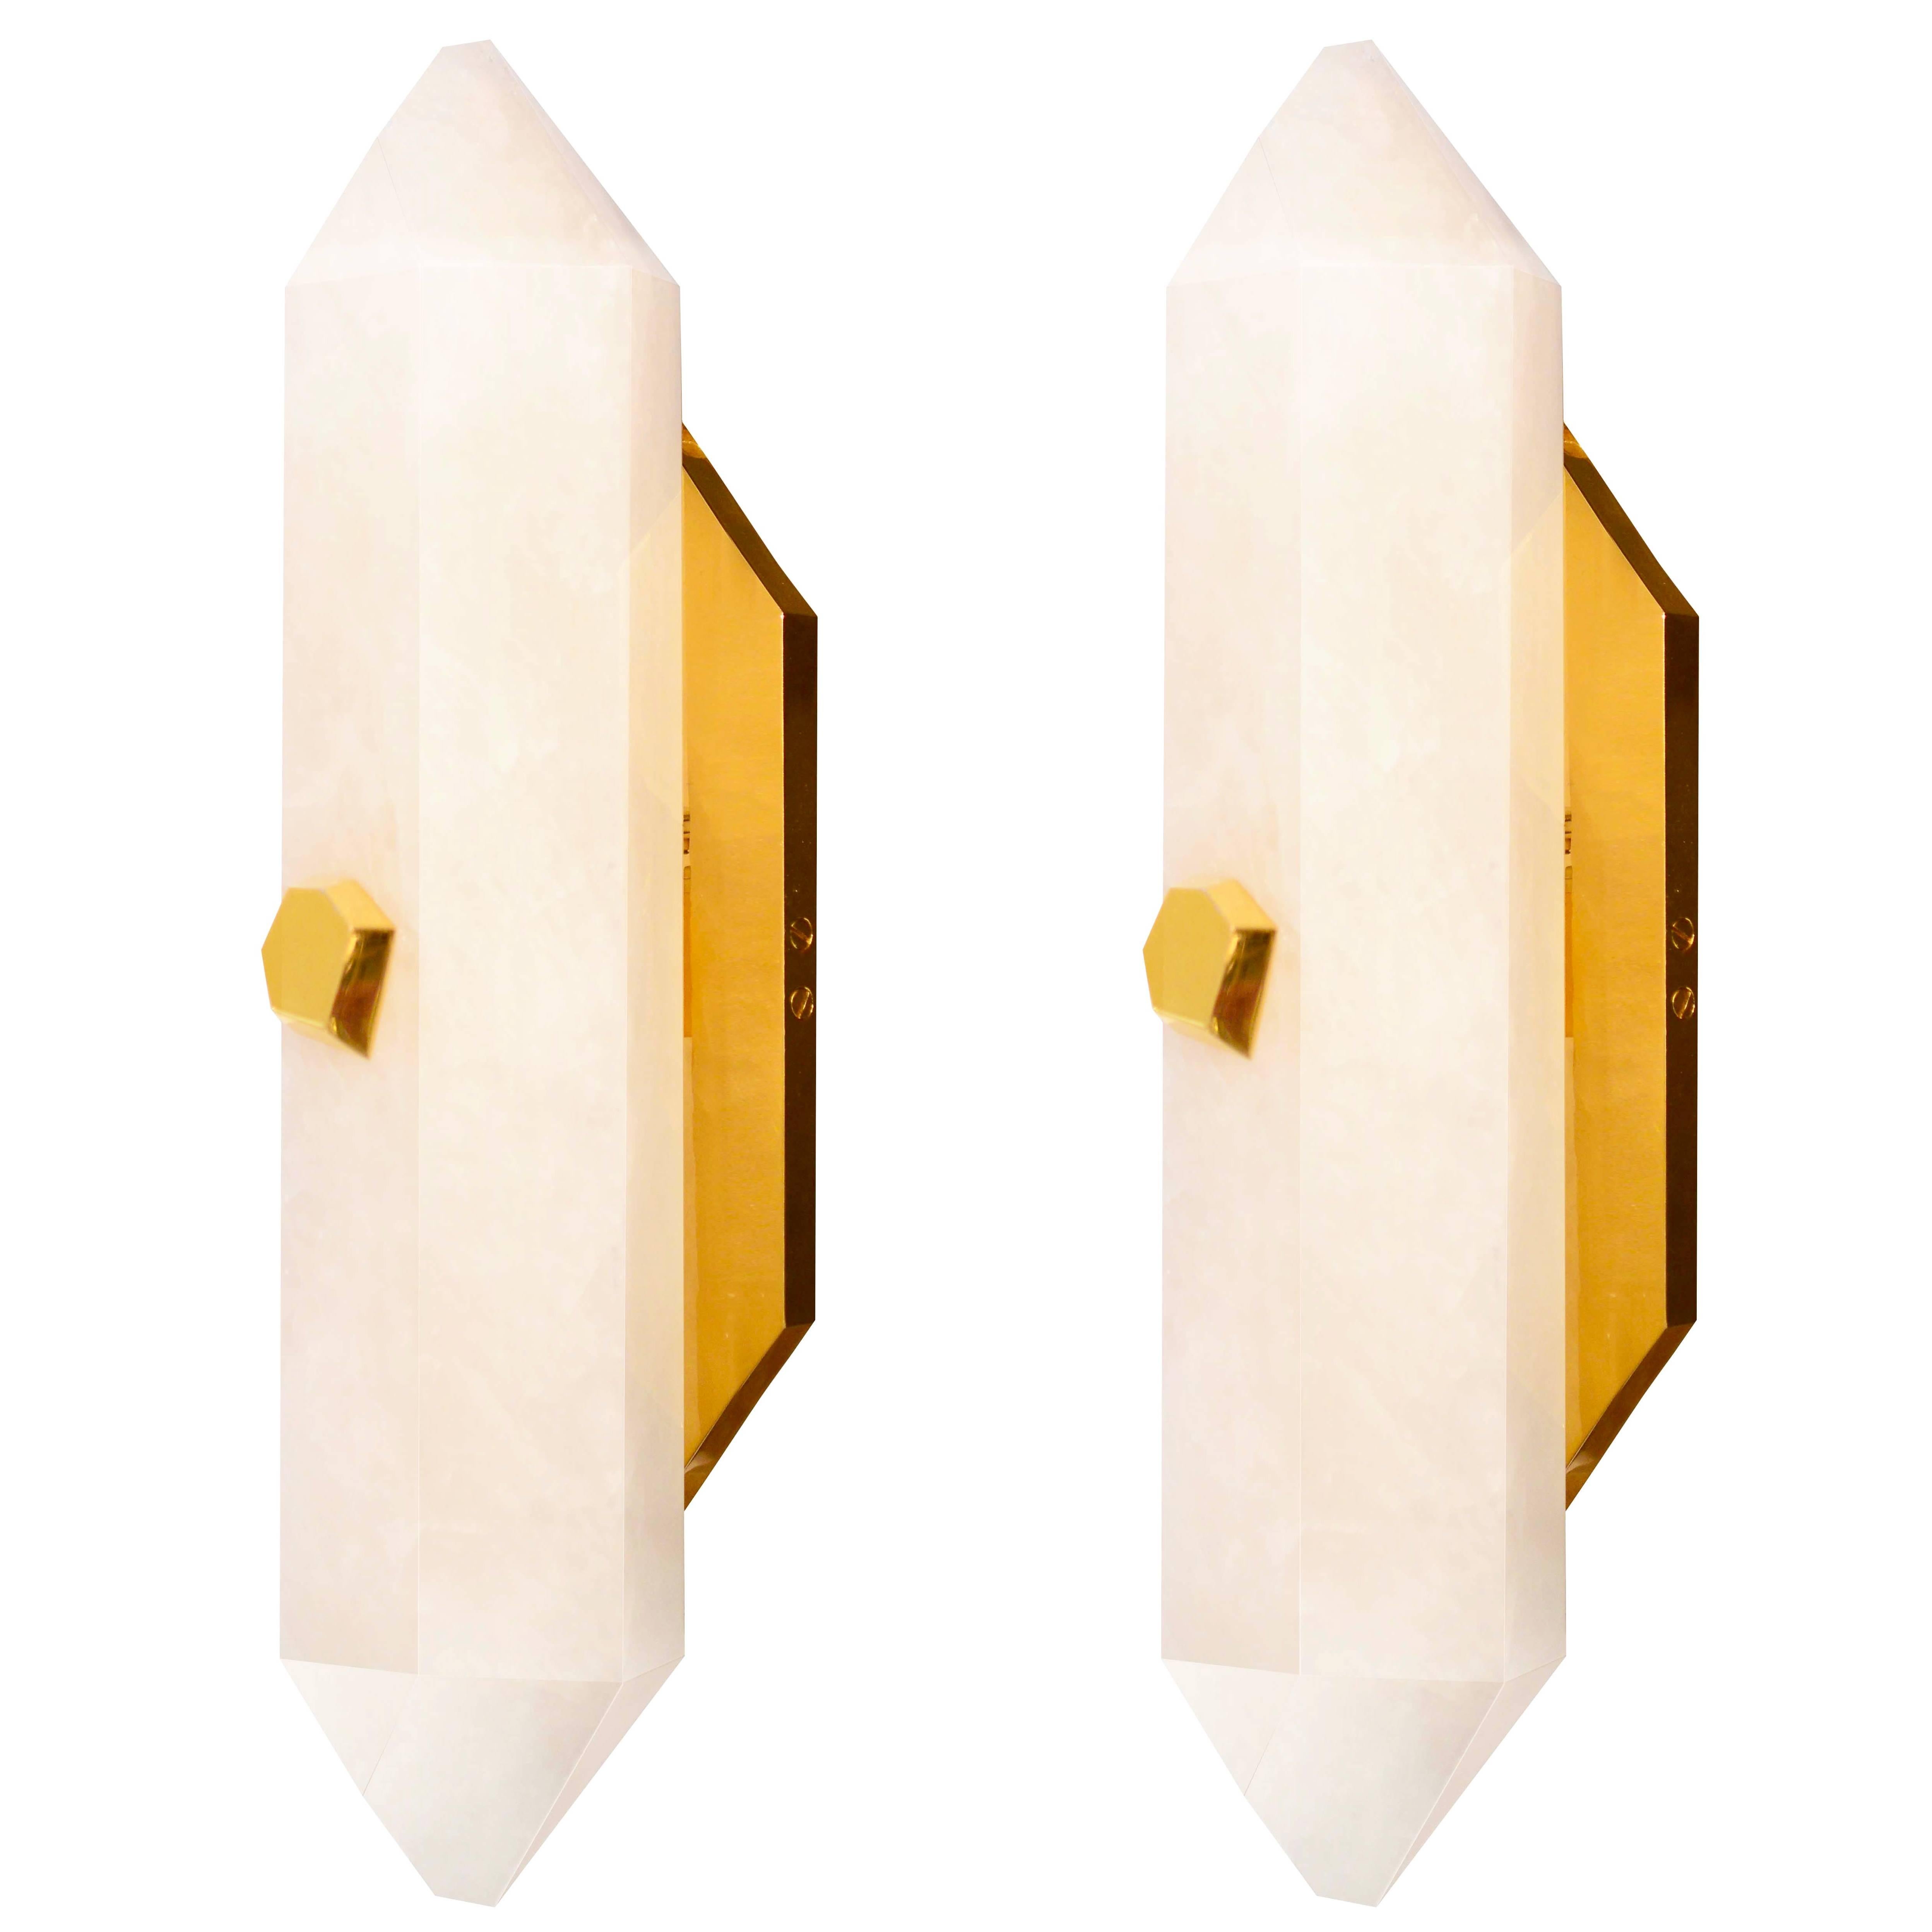 Pair of Diamond Form Rock Crystal Quartz Wall Sconces